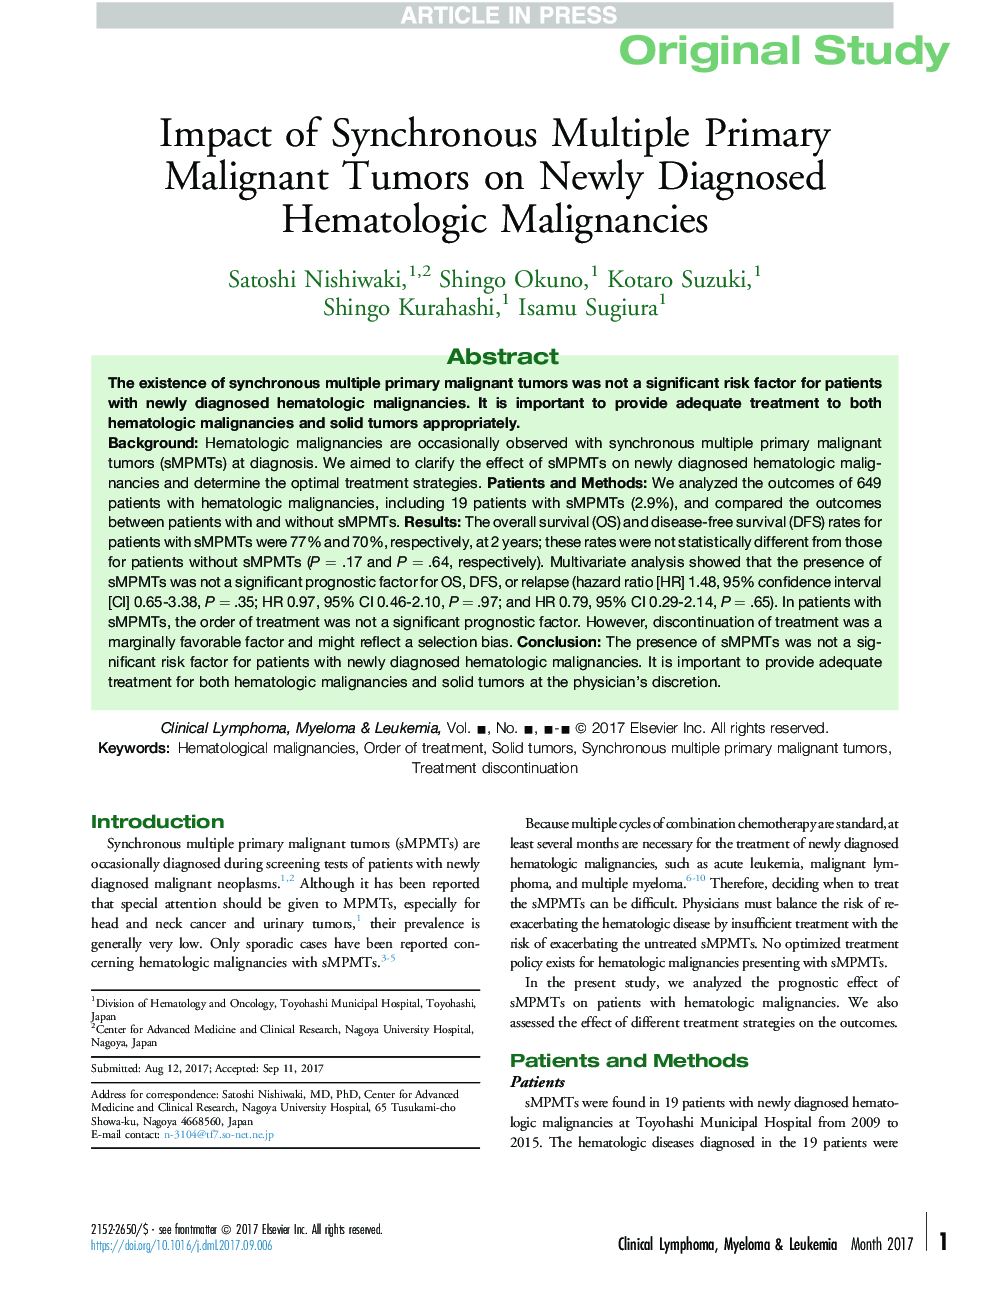 Impact of Synchronous Multiple Primary Malignant Tumors on Newly Diagnosed Hematological Malignancies